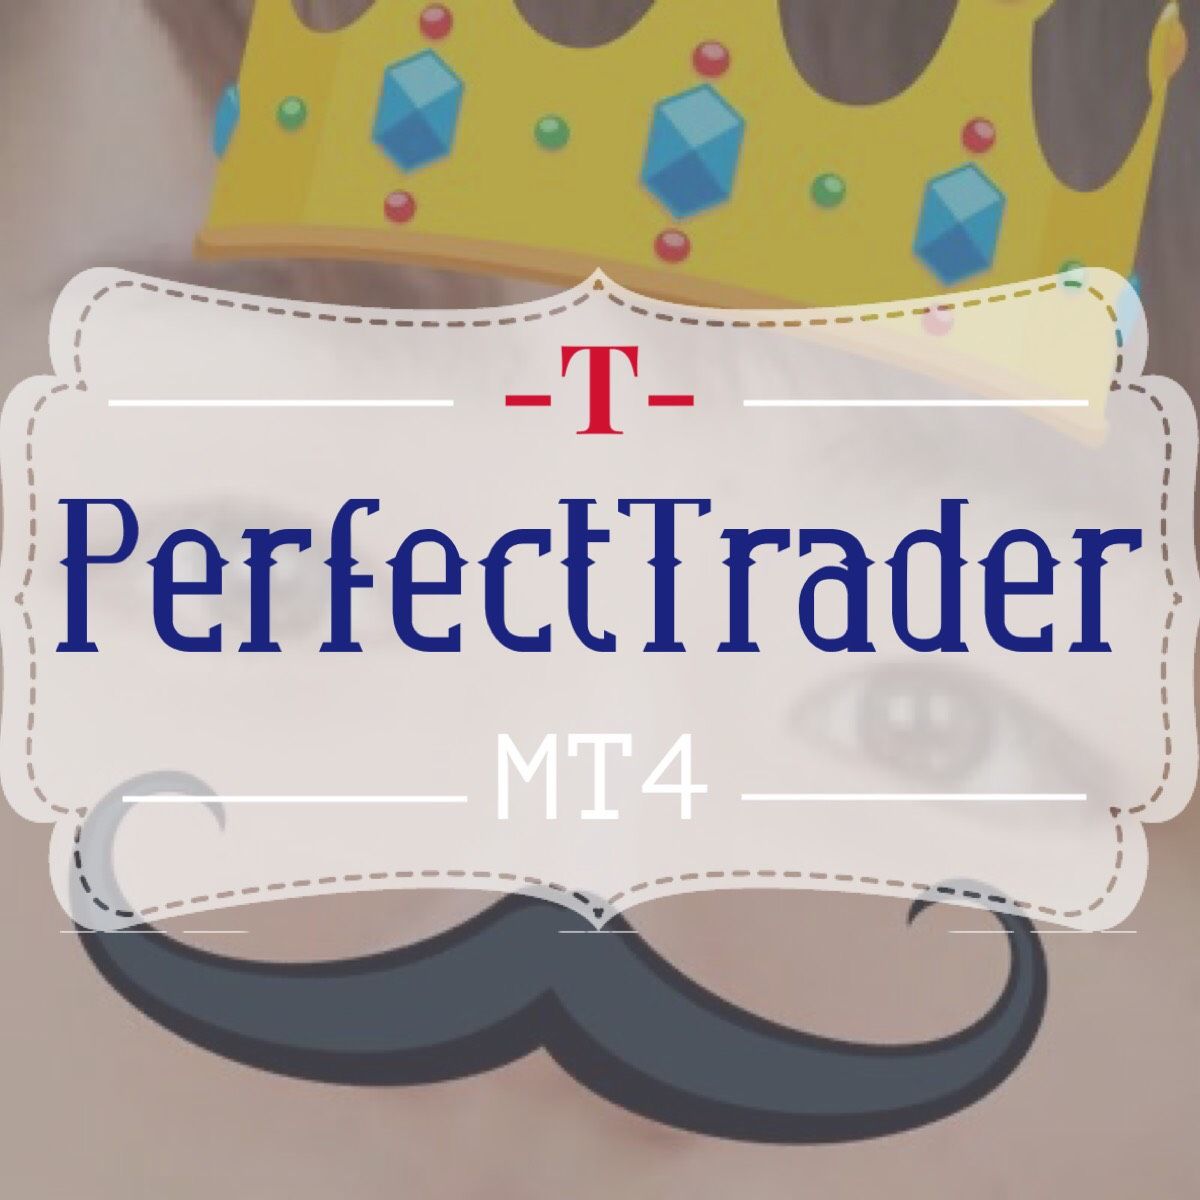 -T- Perfect Trader インジケーター・電子書籍